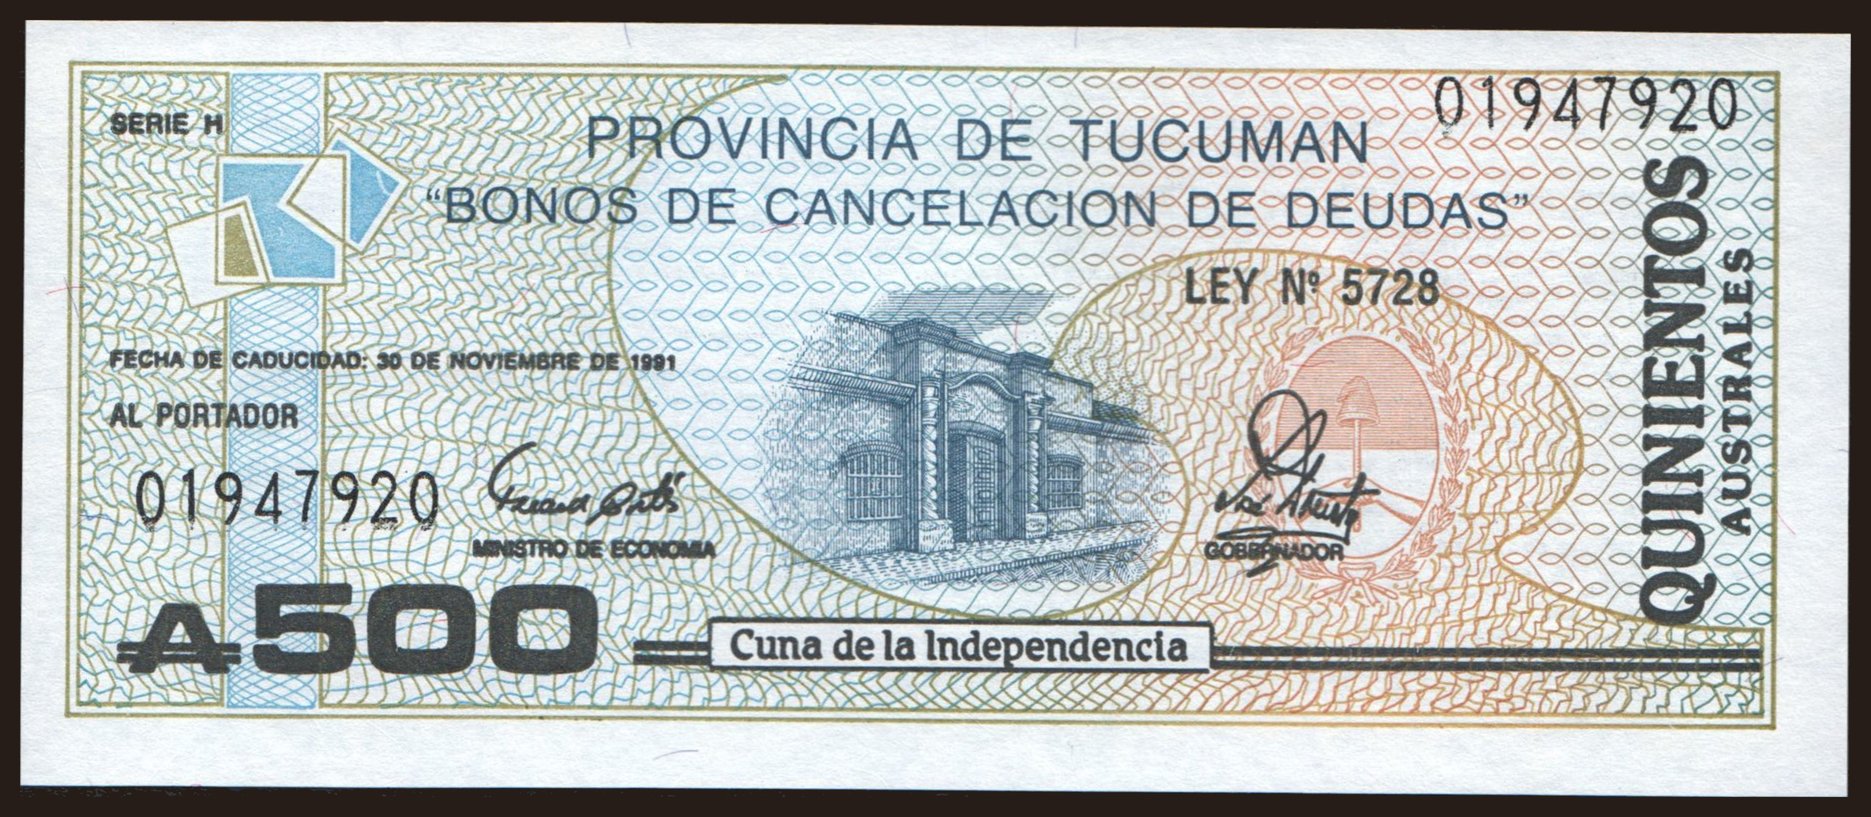 Provincia de Tucuman, 500 australes, 1991